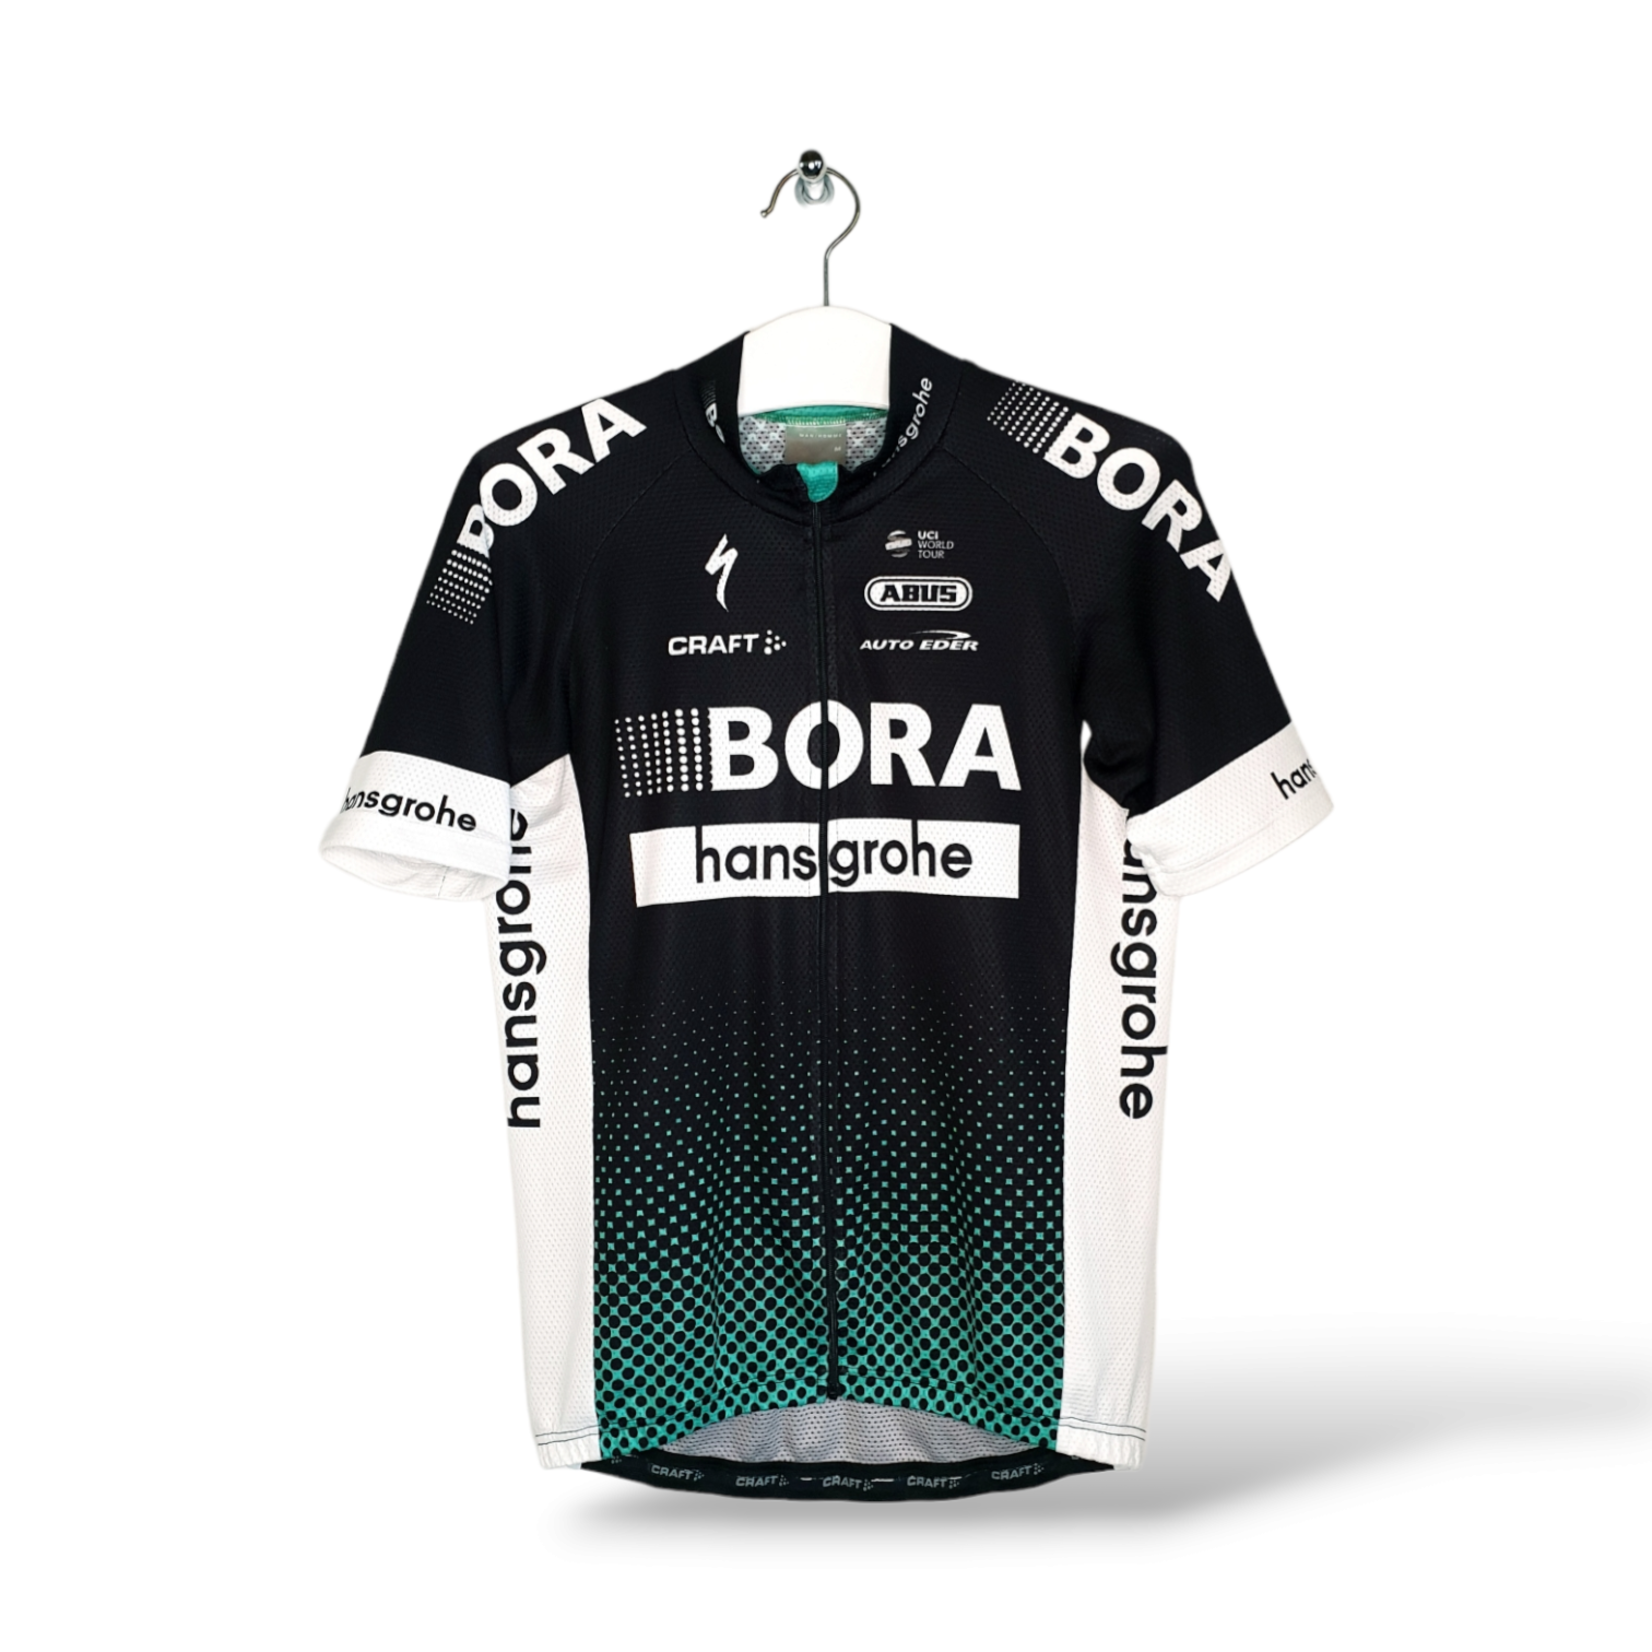 Craft Original Craft vintage cycling jersey Bora - Hansgrohe 2017